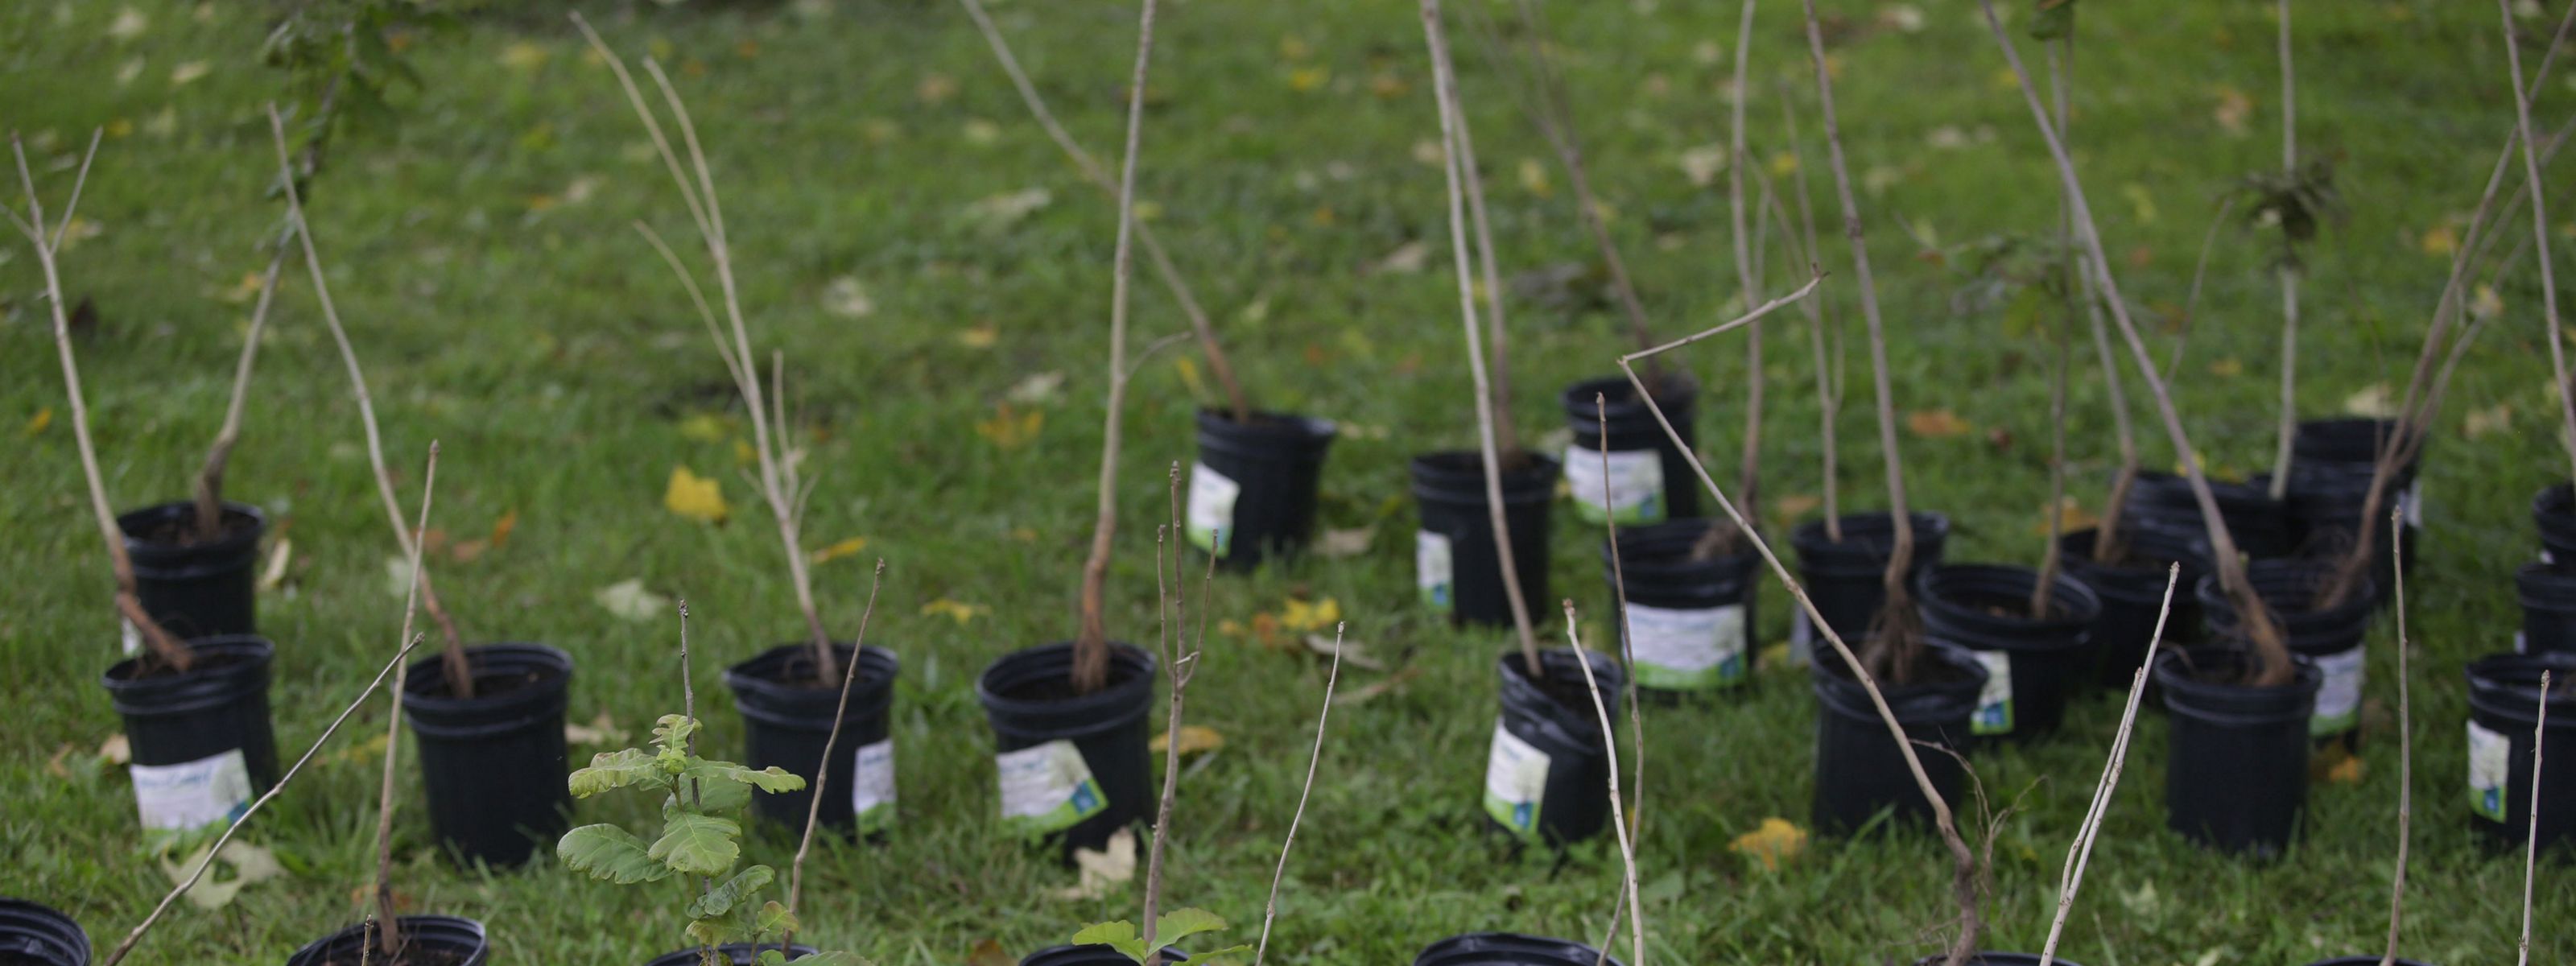 A few rows of tree saplings in nursery buckets wait on a grass field before being planted.